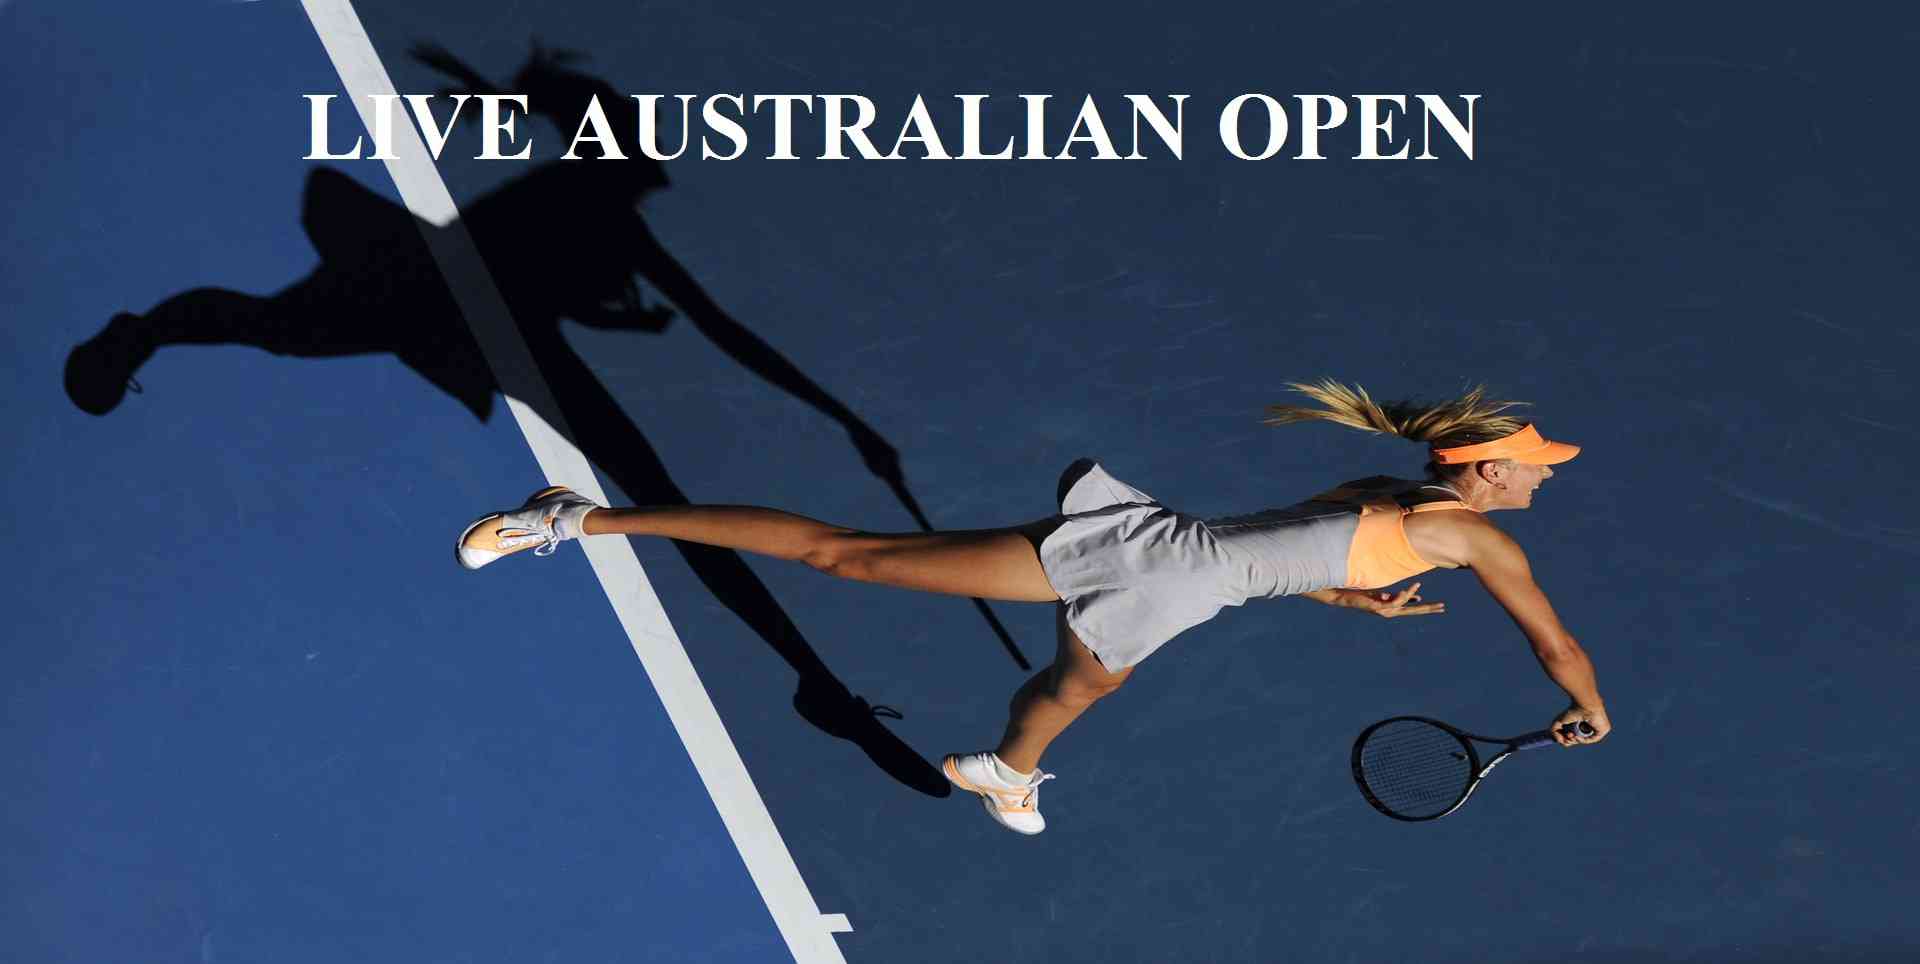 Australian Open 2021 Round 4 Live Stream